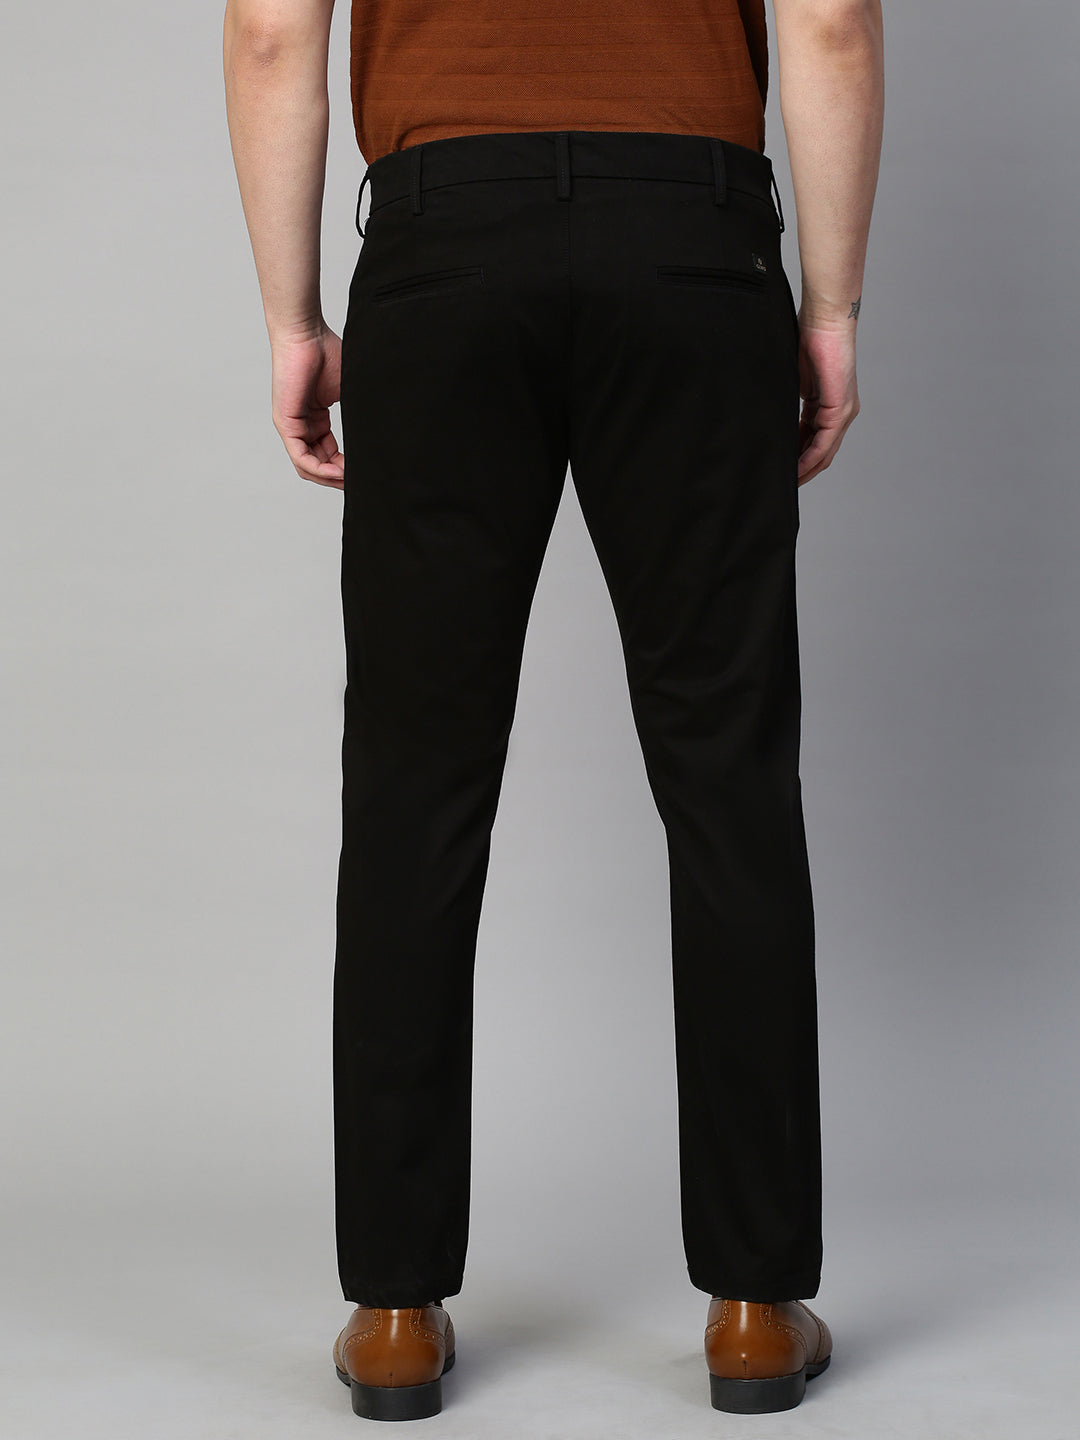 Genips Men's Black Stretch Caribbean Slim Fit Solid Trousers